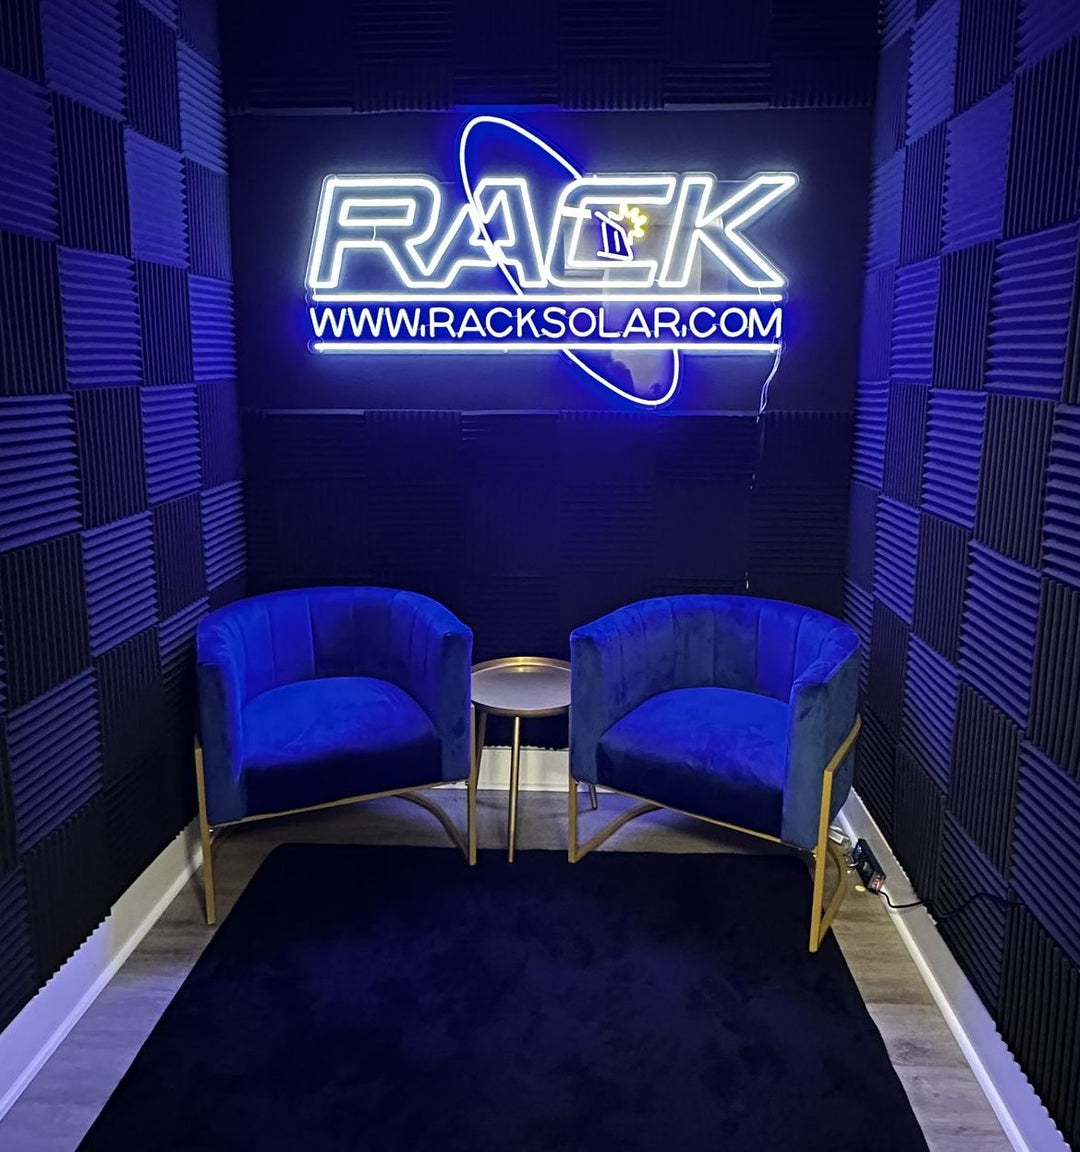 Rack-Solar-Cold-White-logo-neon